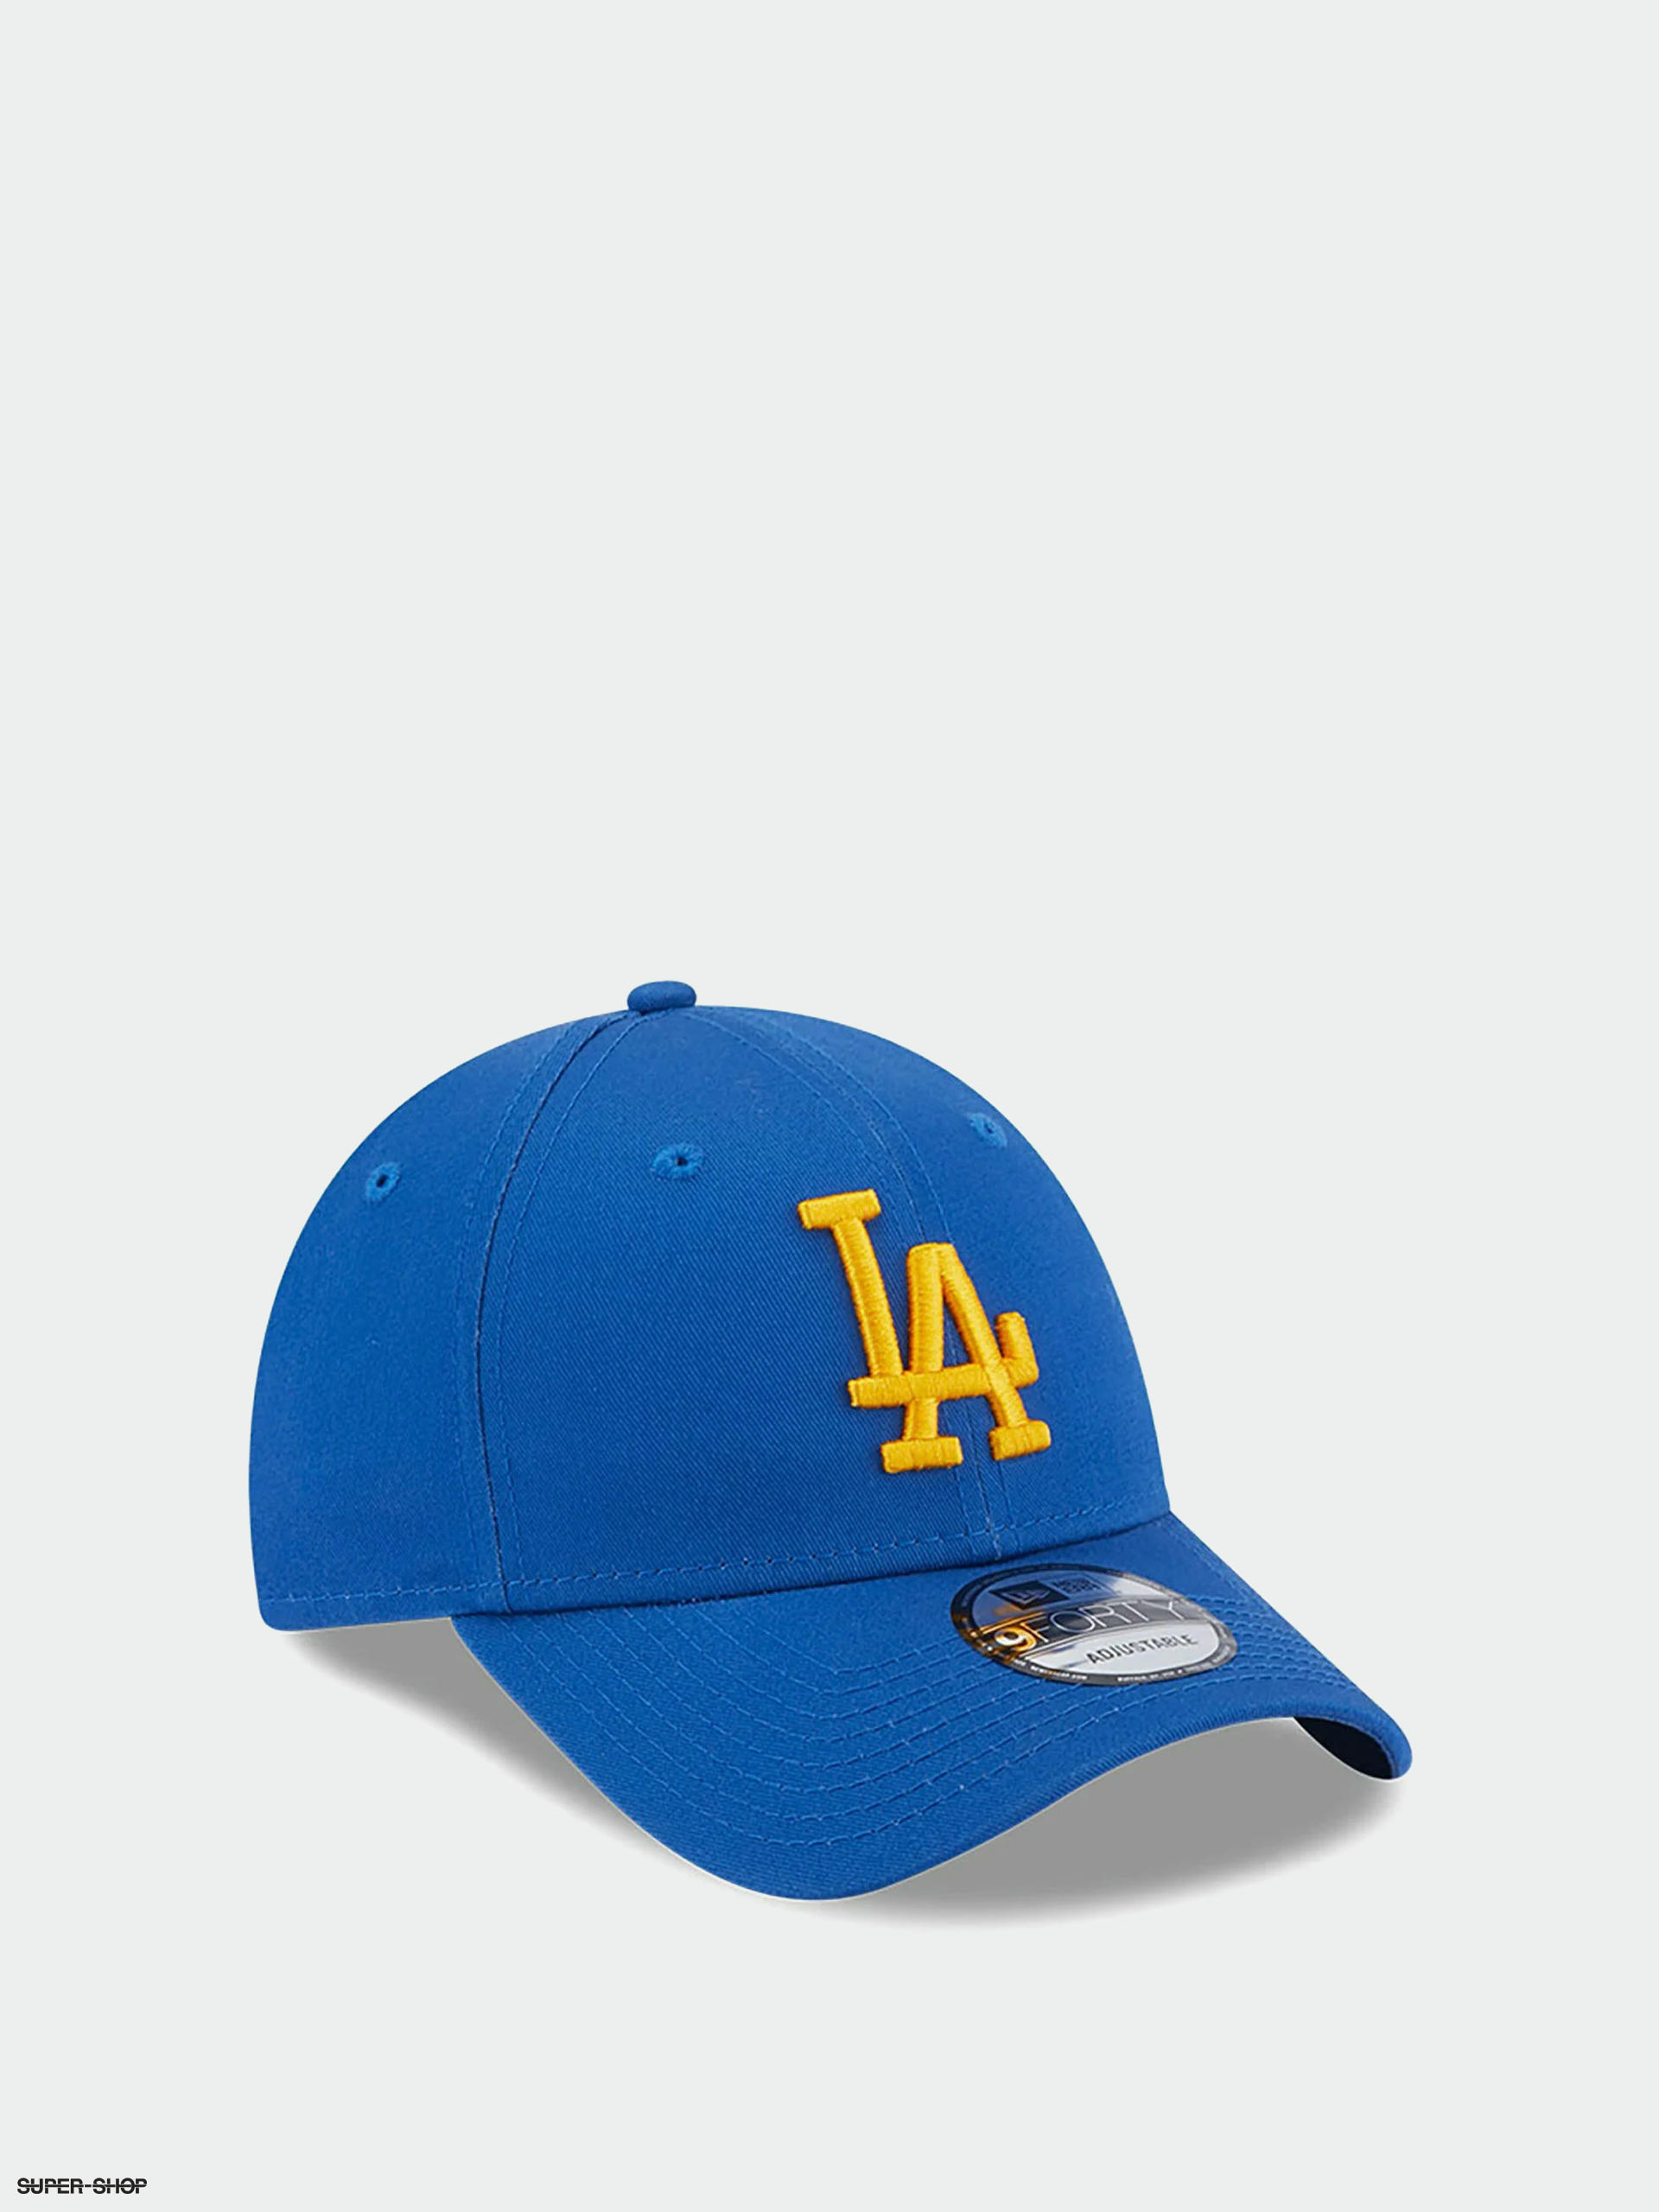 https://static.super-shop.com/1421141-new-era-league-essential-9forty-los-angeles-dodgers-cap-blue-yellow.jpg?w=1920